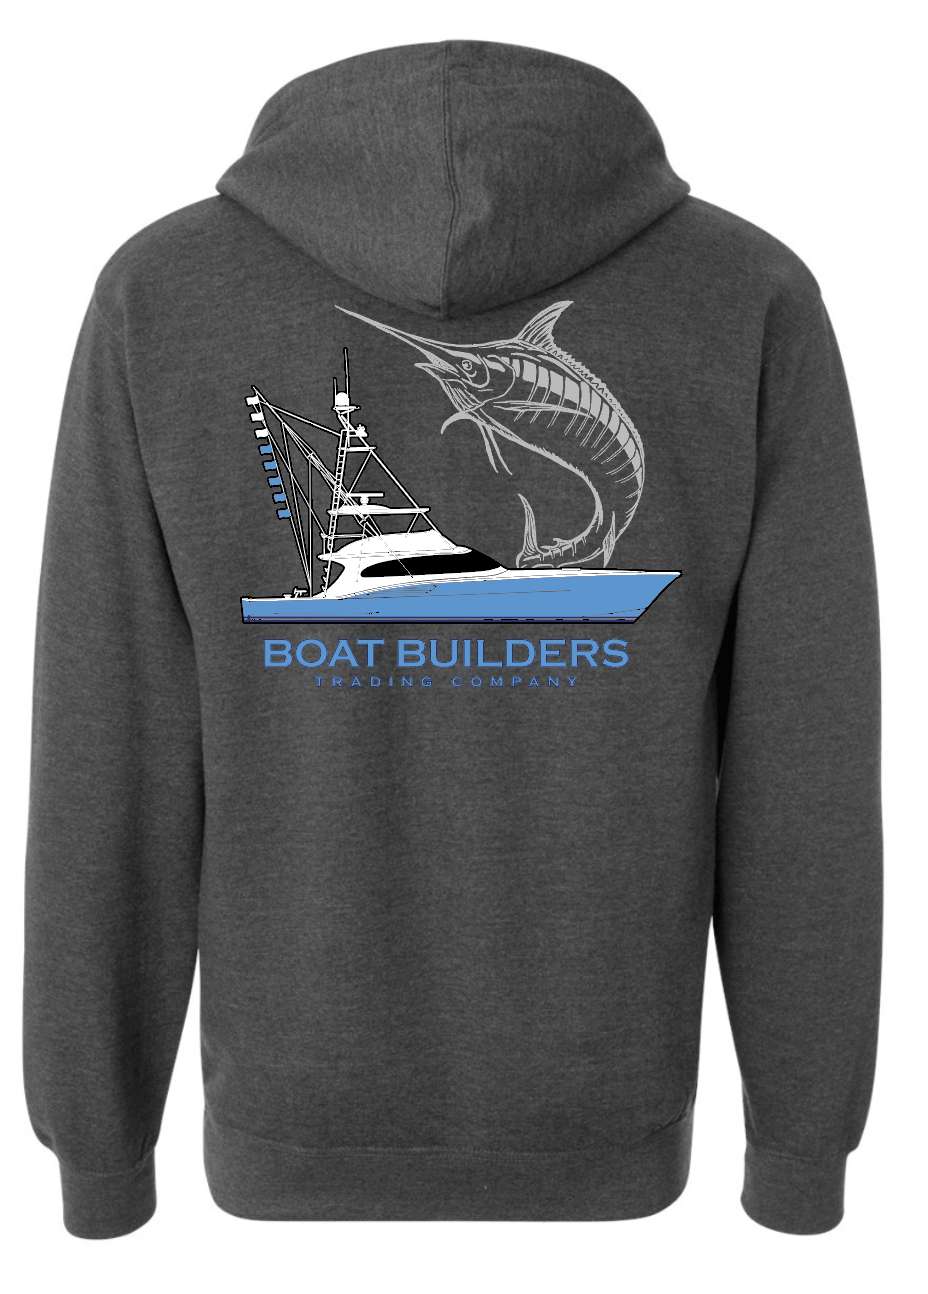 Boat Builders Trading Hooded Sweatshirt - Blue Sportfish / Marlin